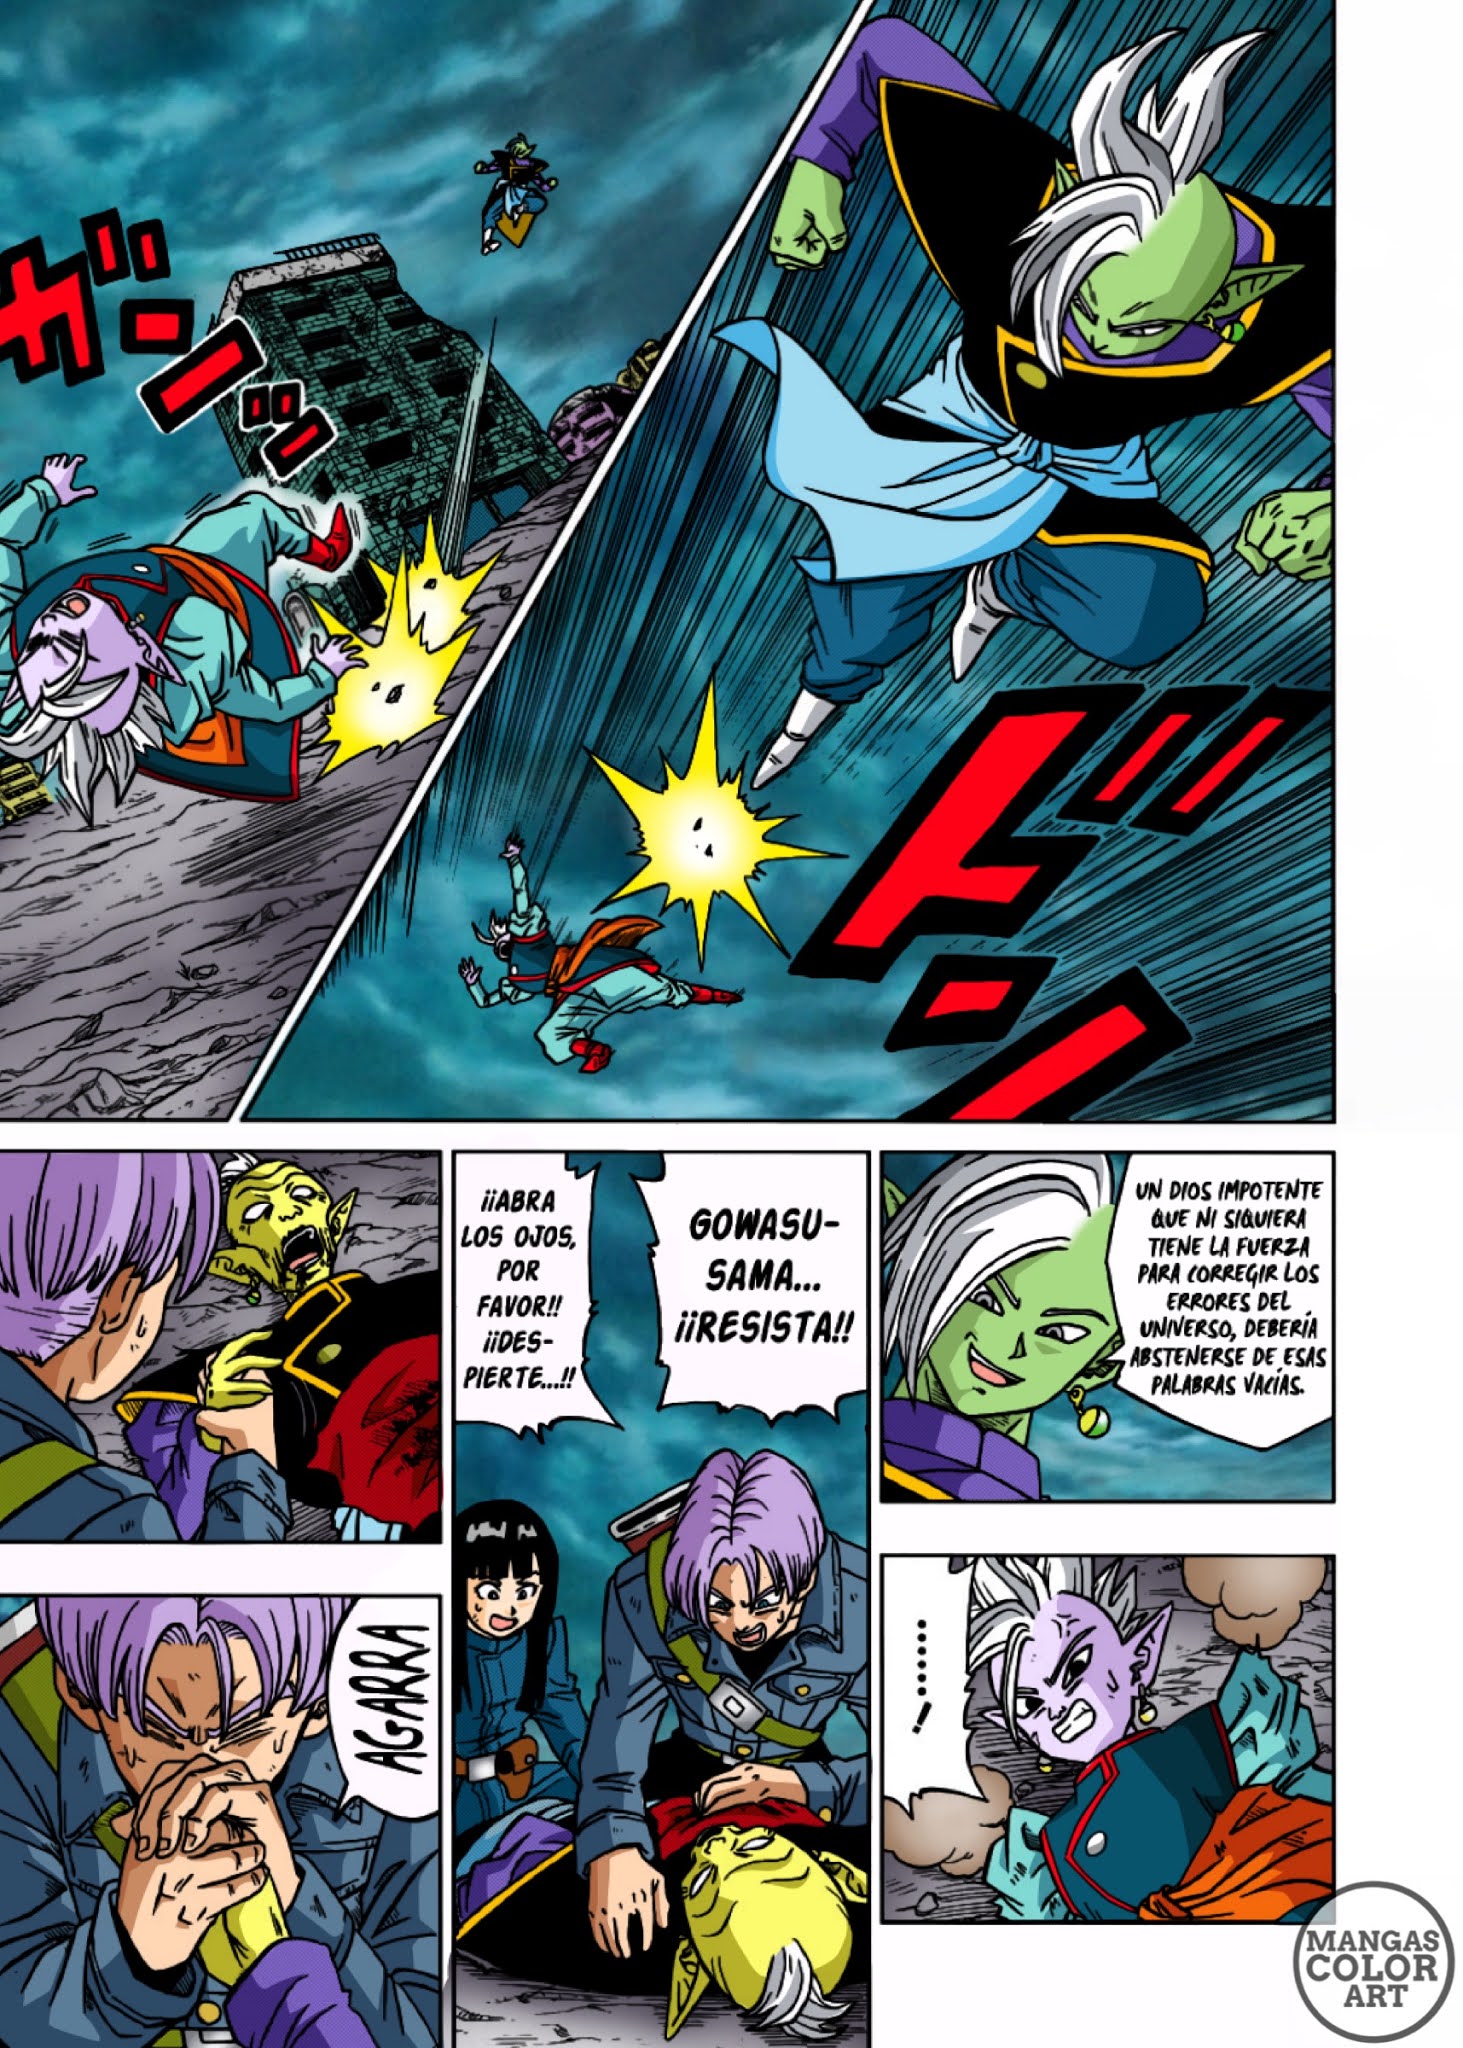 BolmanJump - Dragon ball super manga 22 color #2